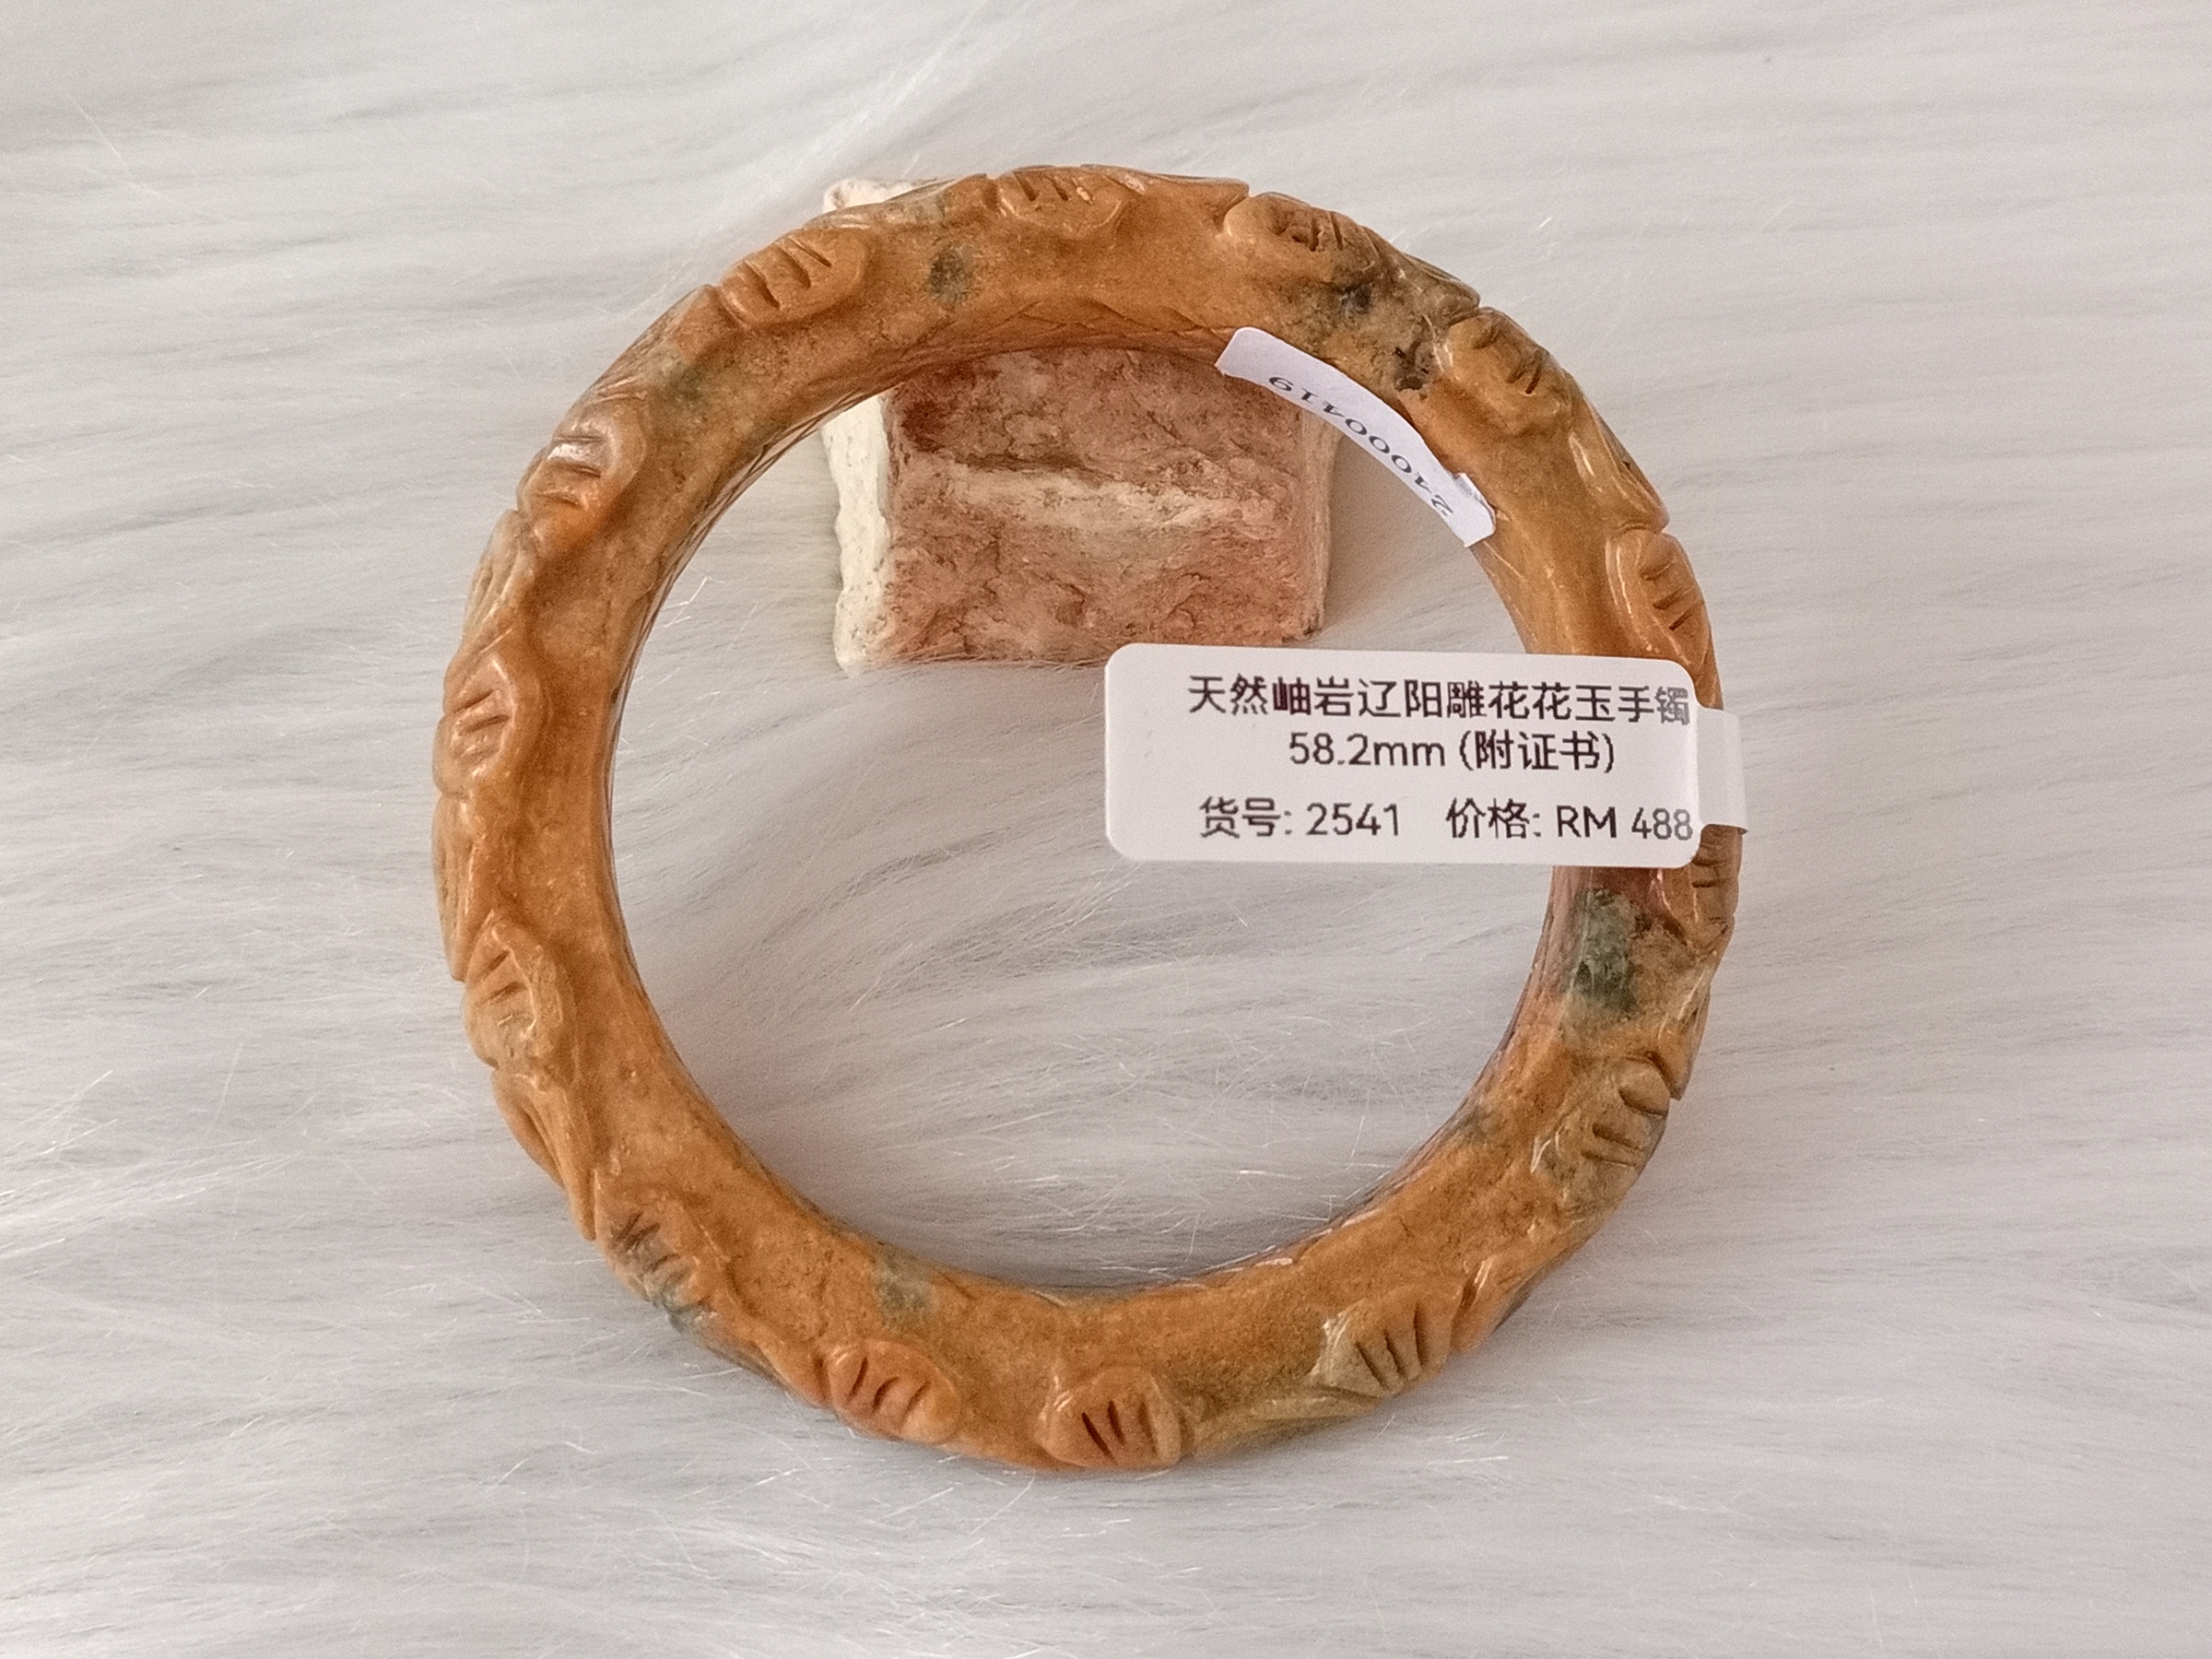 🍀 B2541 - Natural Carved Serpentine Jade Bangle 58mm (with certificate) 天然岫岩辽阳雕花花玉手镯 58mm (附证书)